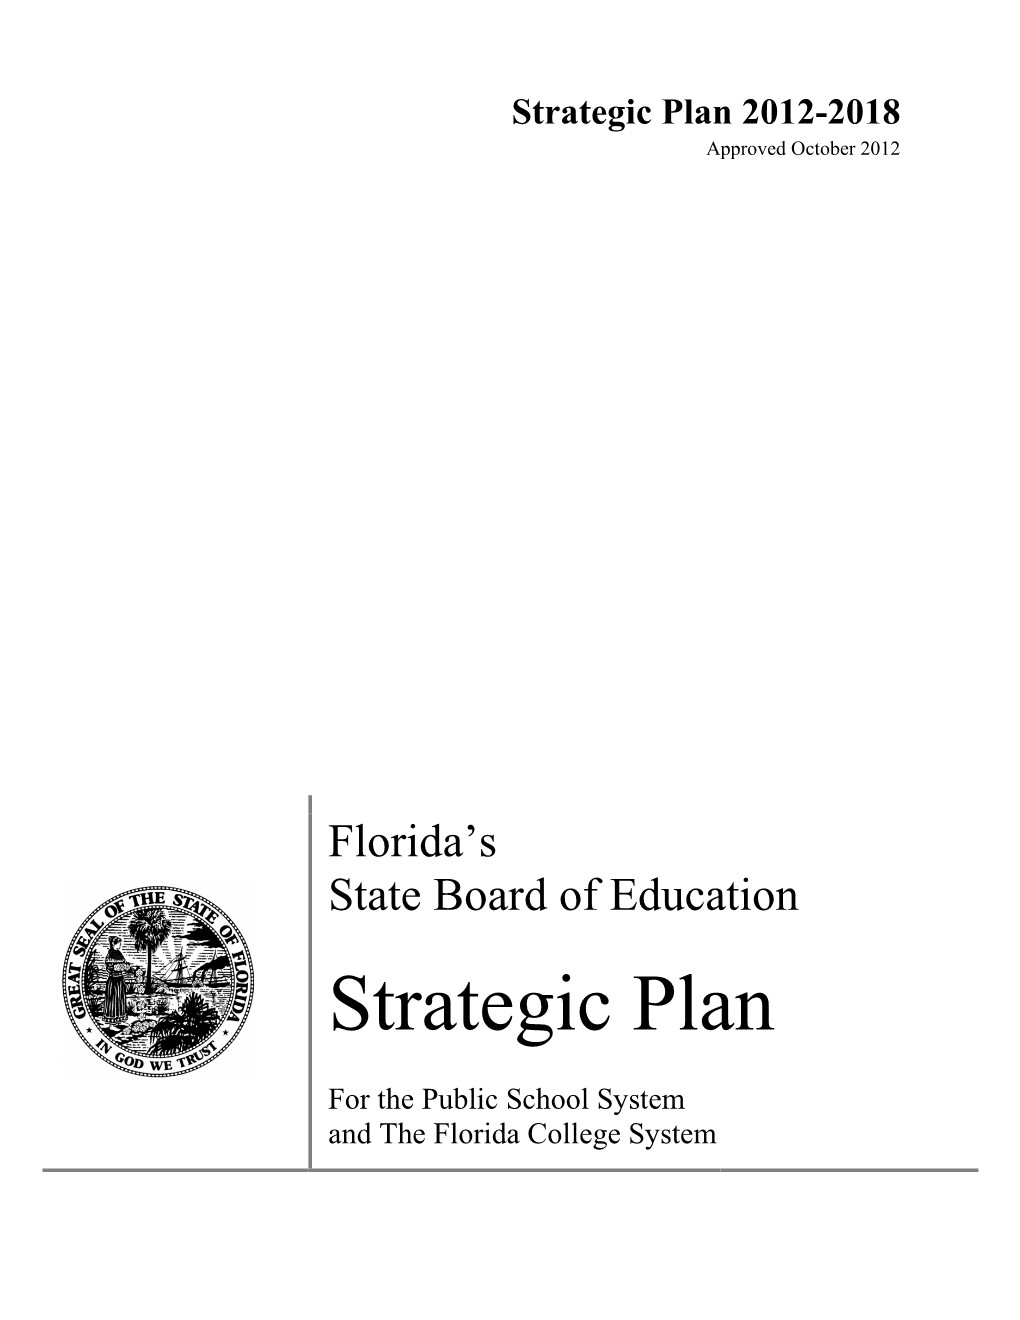 Strategic Plan 2012-2018 Approved October 2012